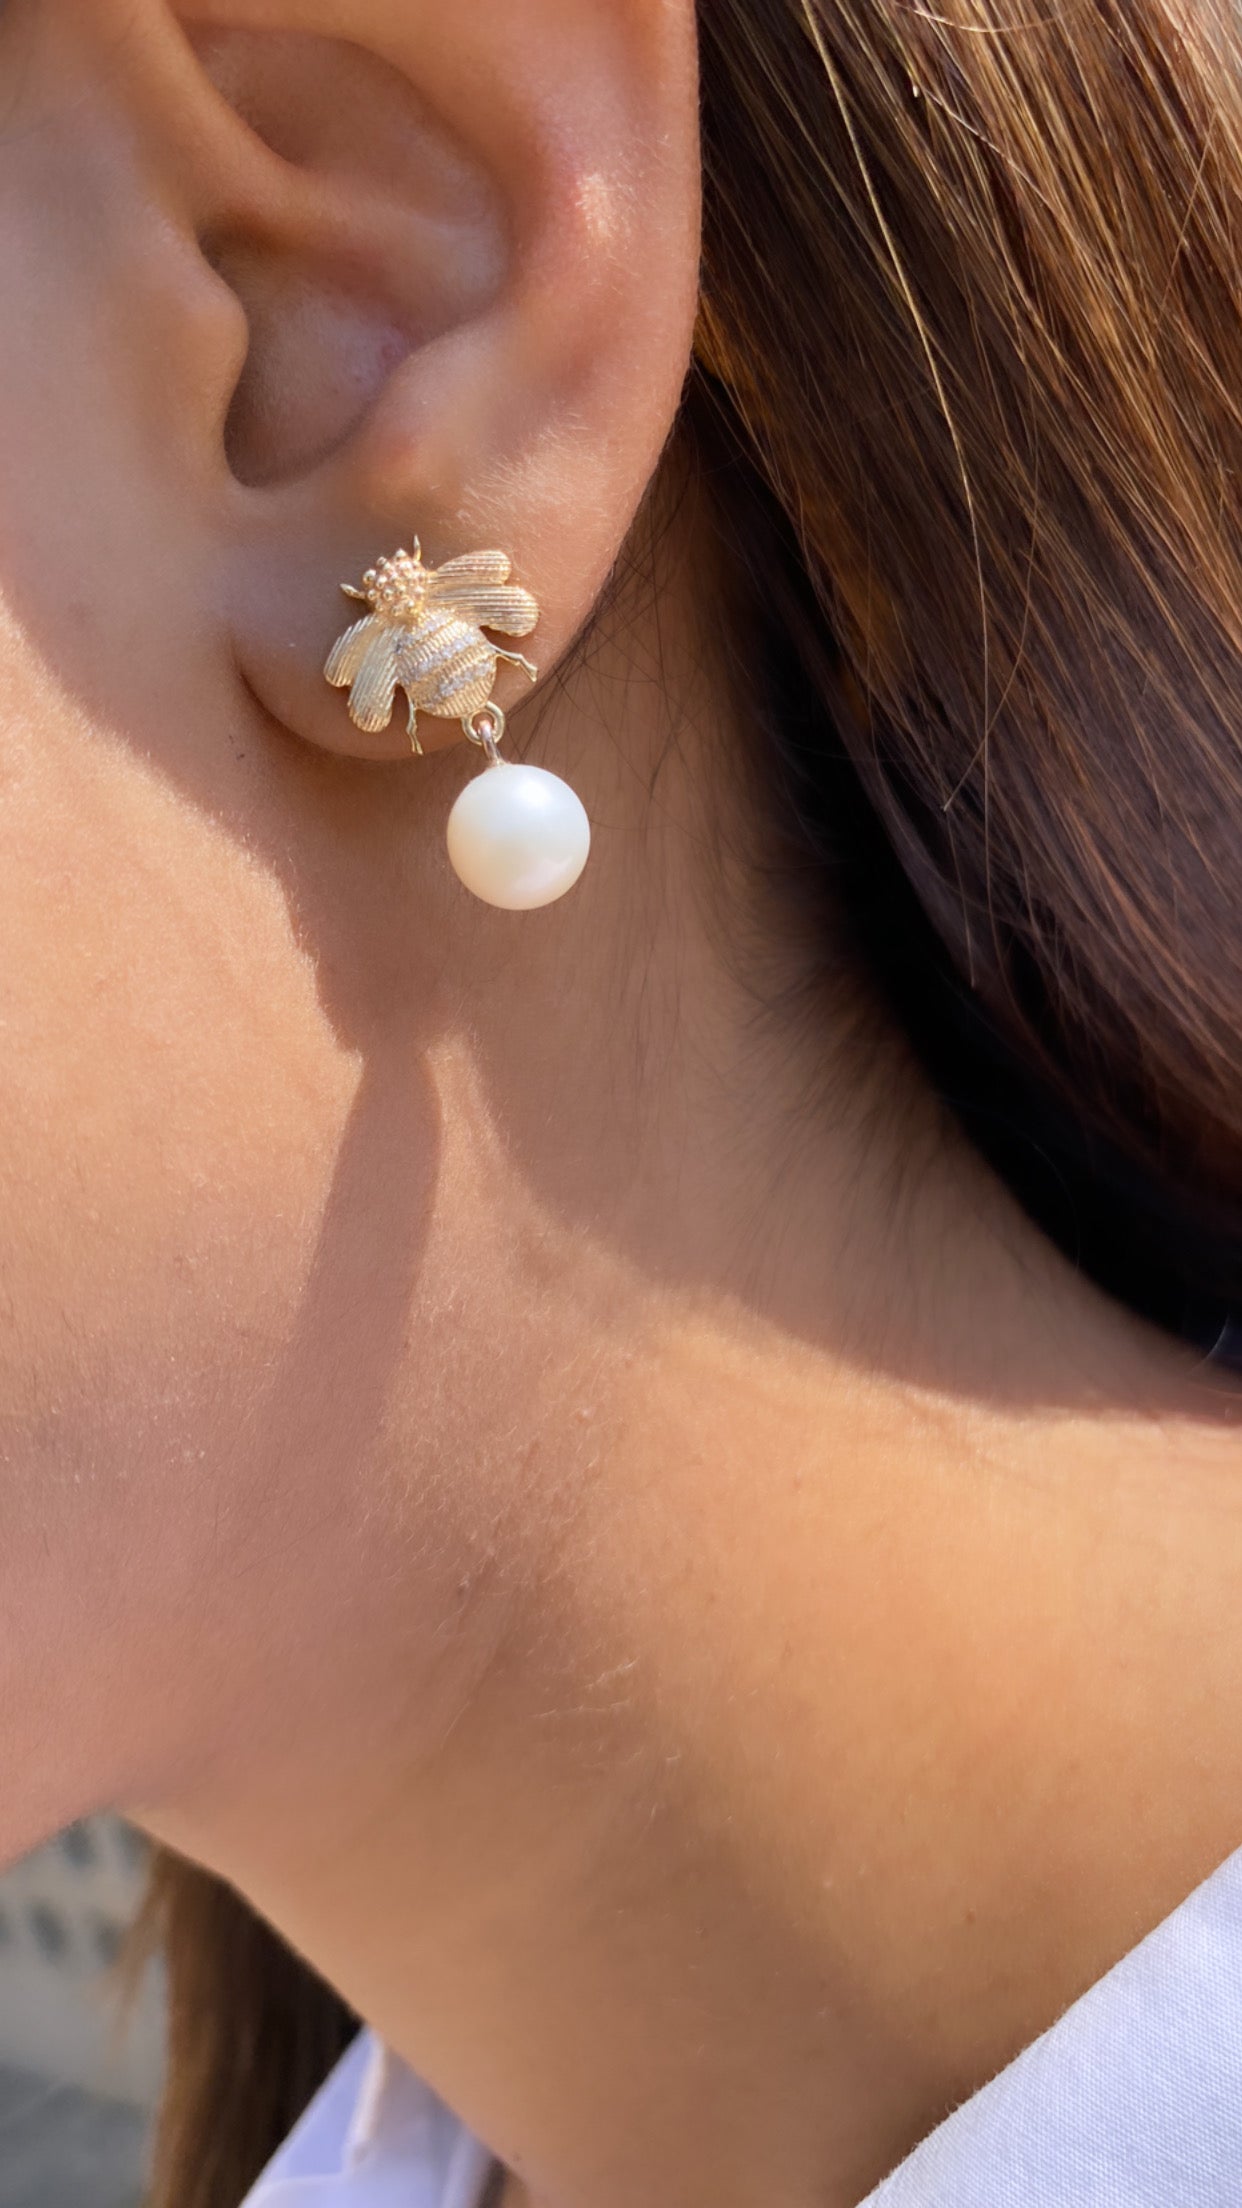 Bumble Bee Diamond and Pearl Earrings